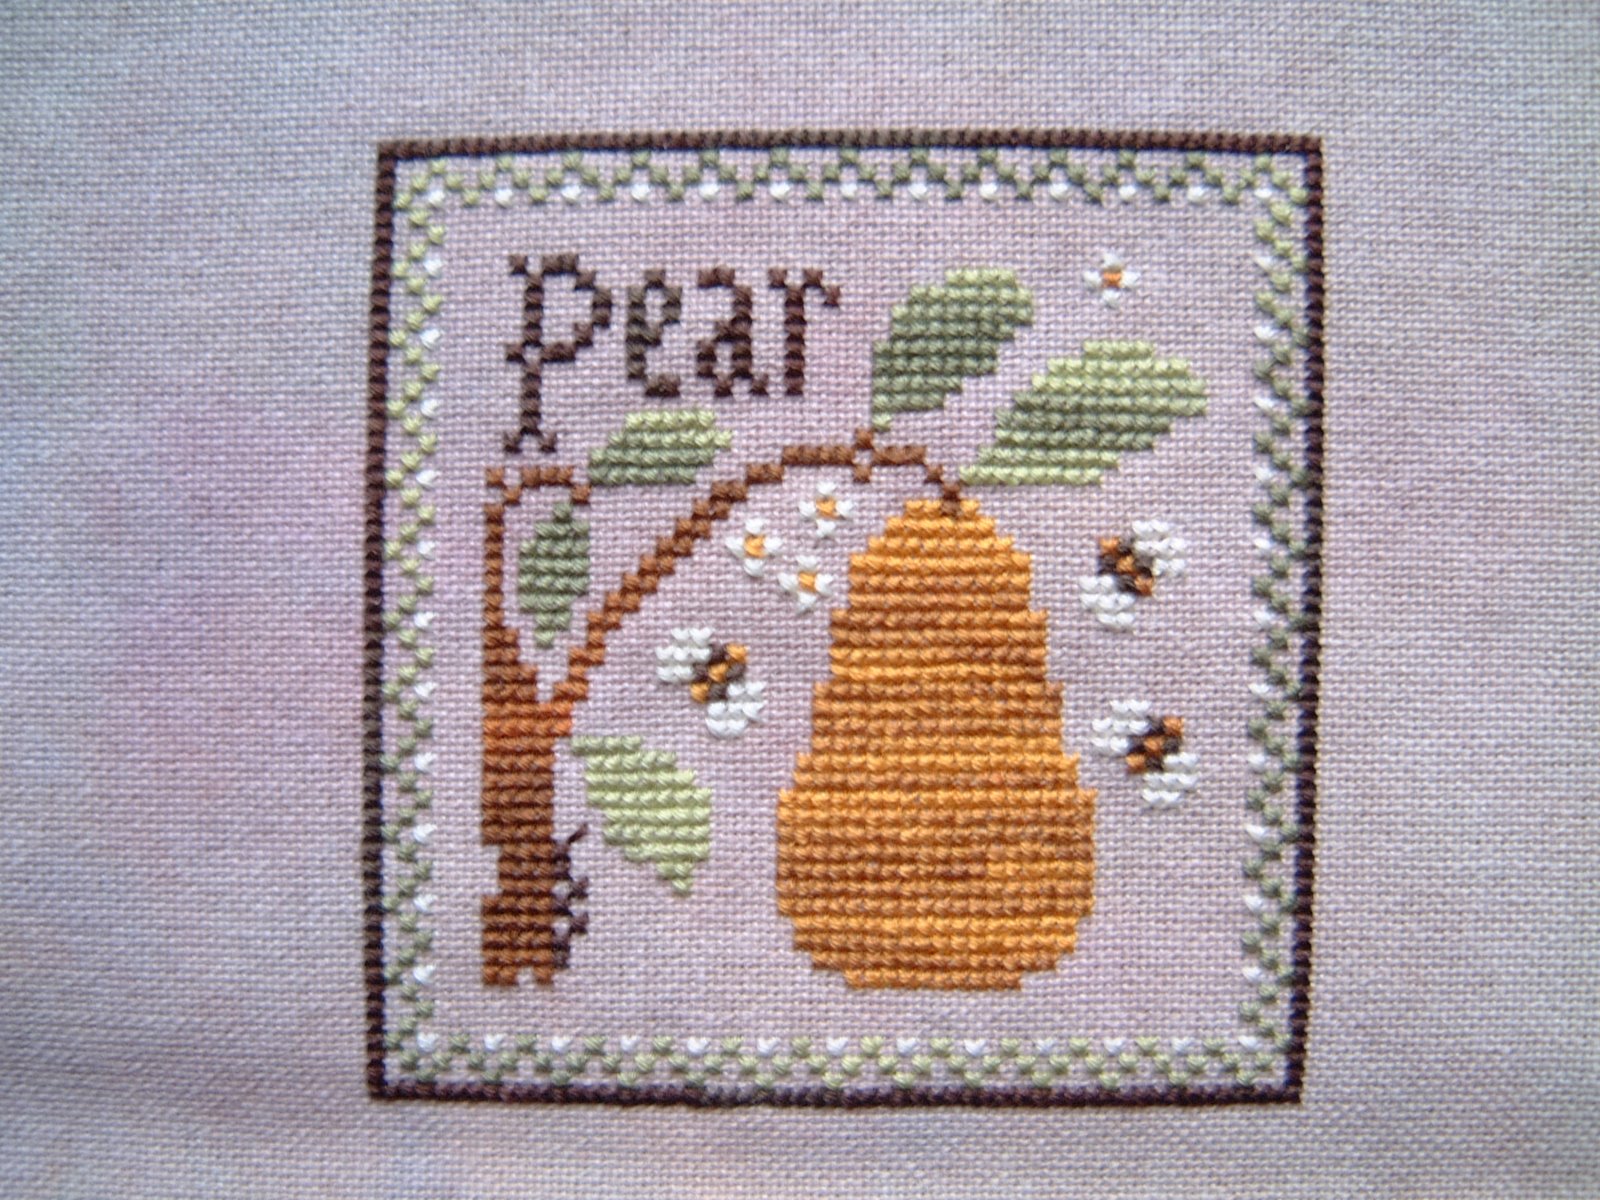 [Pear.JPG]